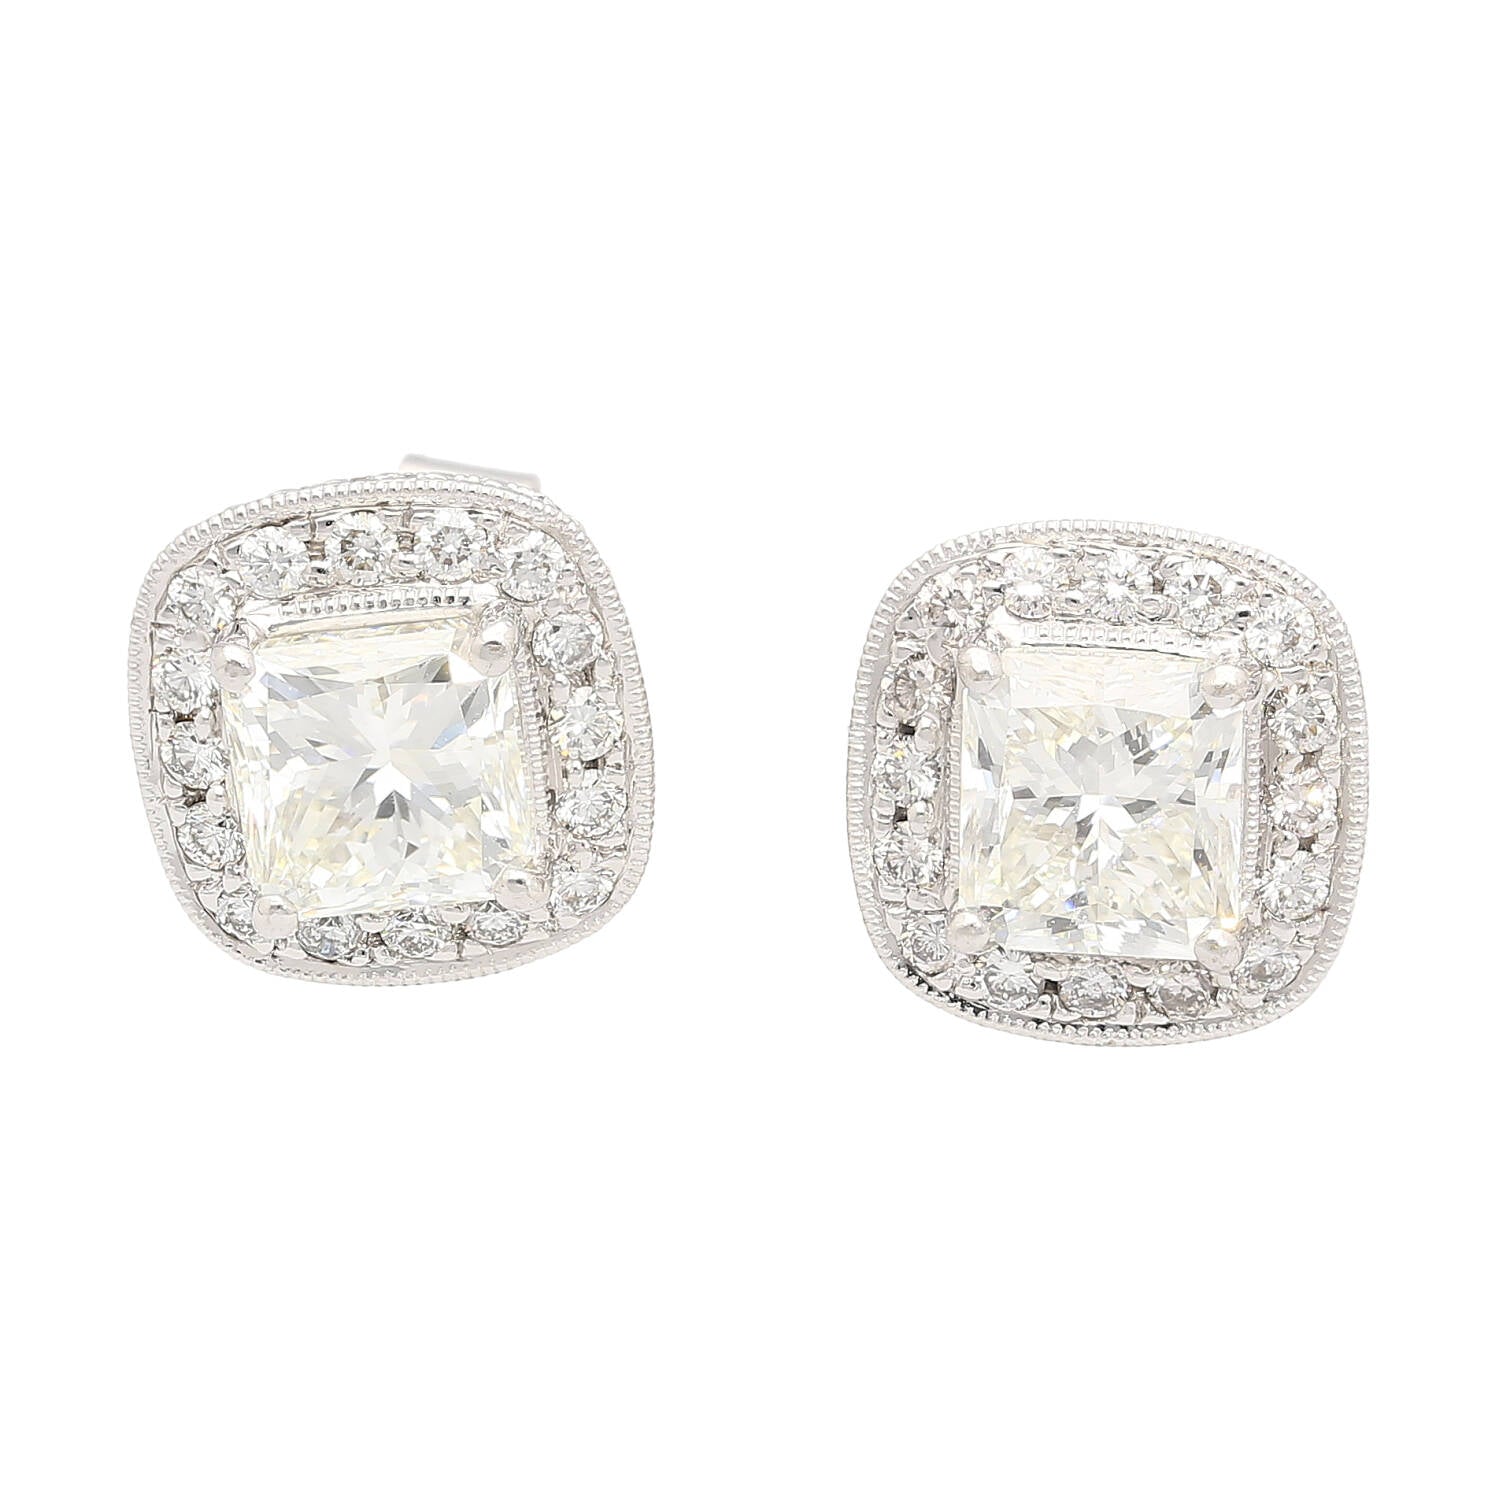 Discover more than 240 gia certified diamond earrings